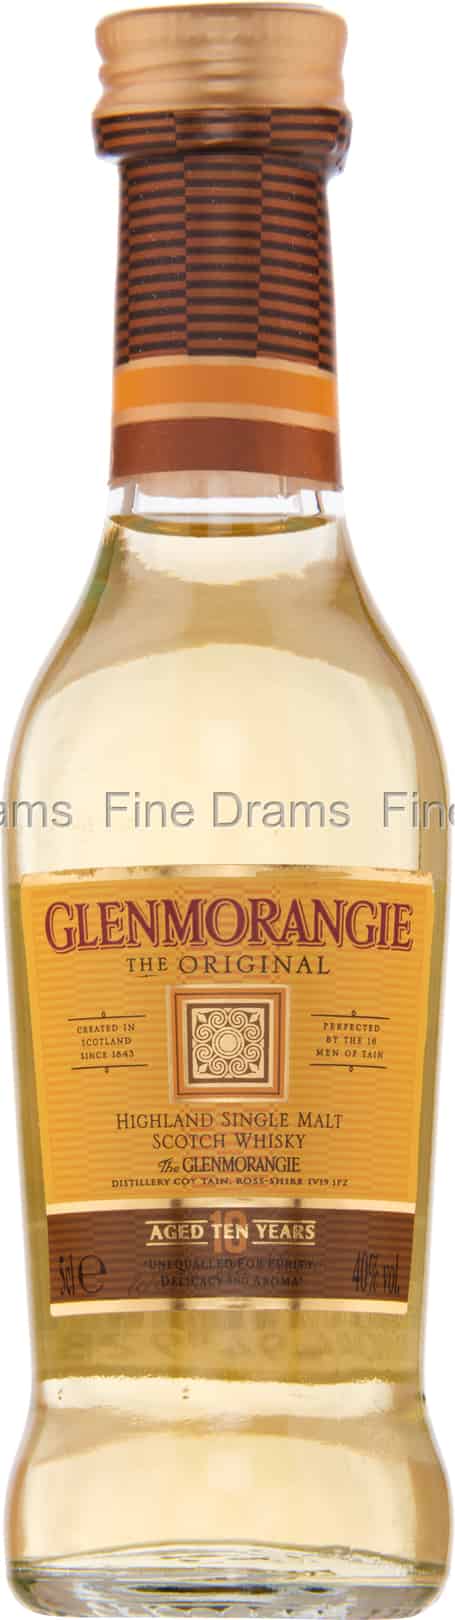 Glenmorangie Scotch Single Malt 10 Year The Original Single Malt